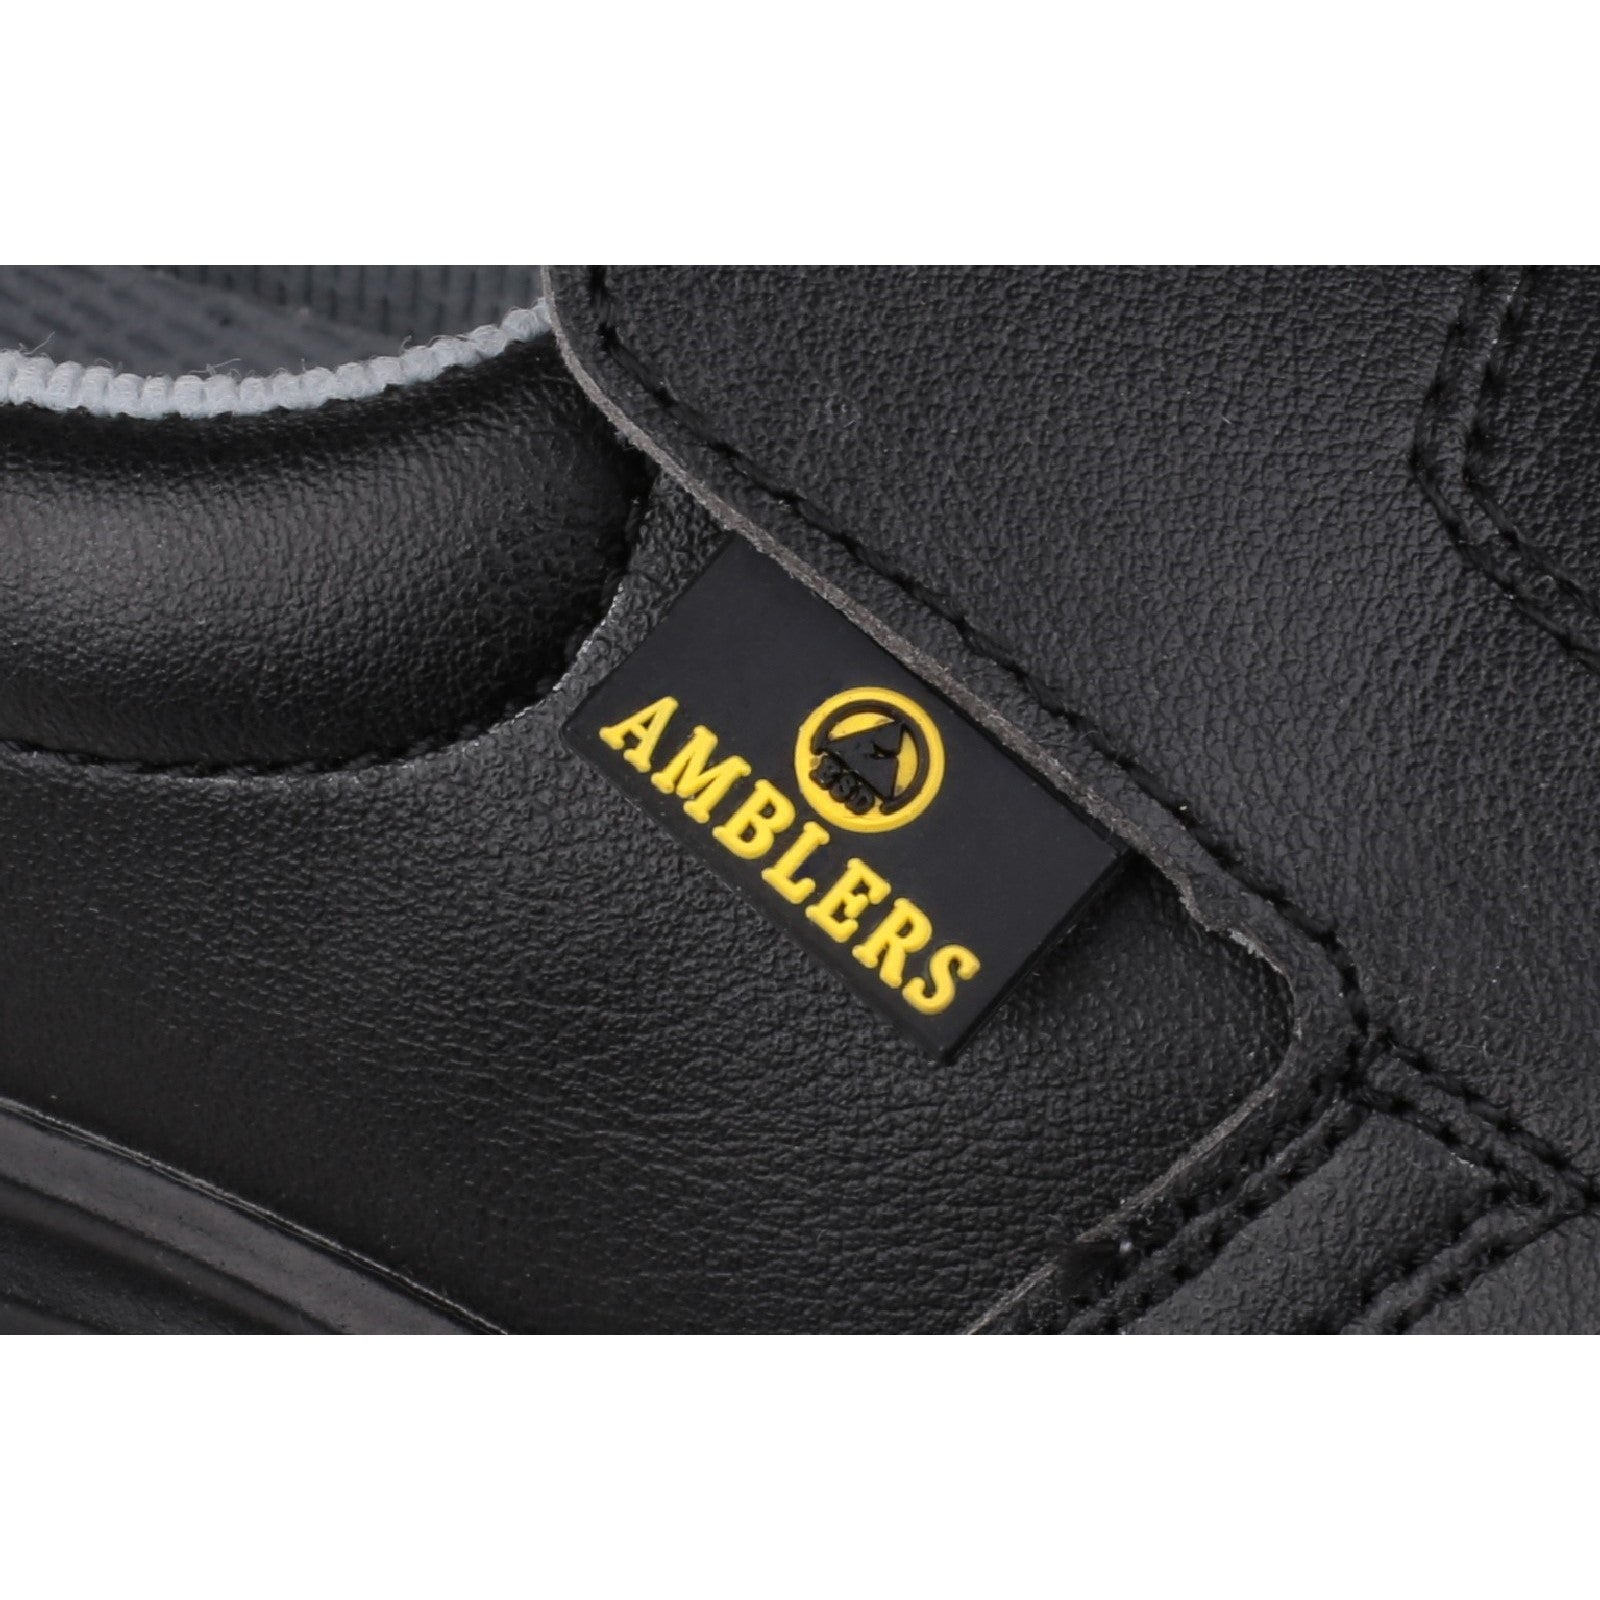 Amblers FS661 Metal Free Lightweight safety Shoe